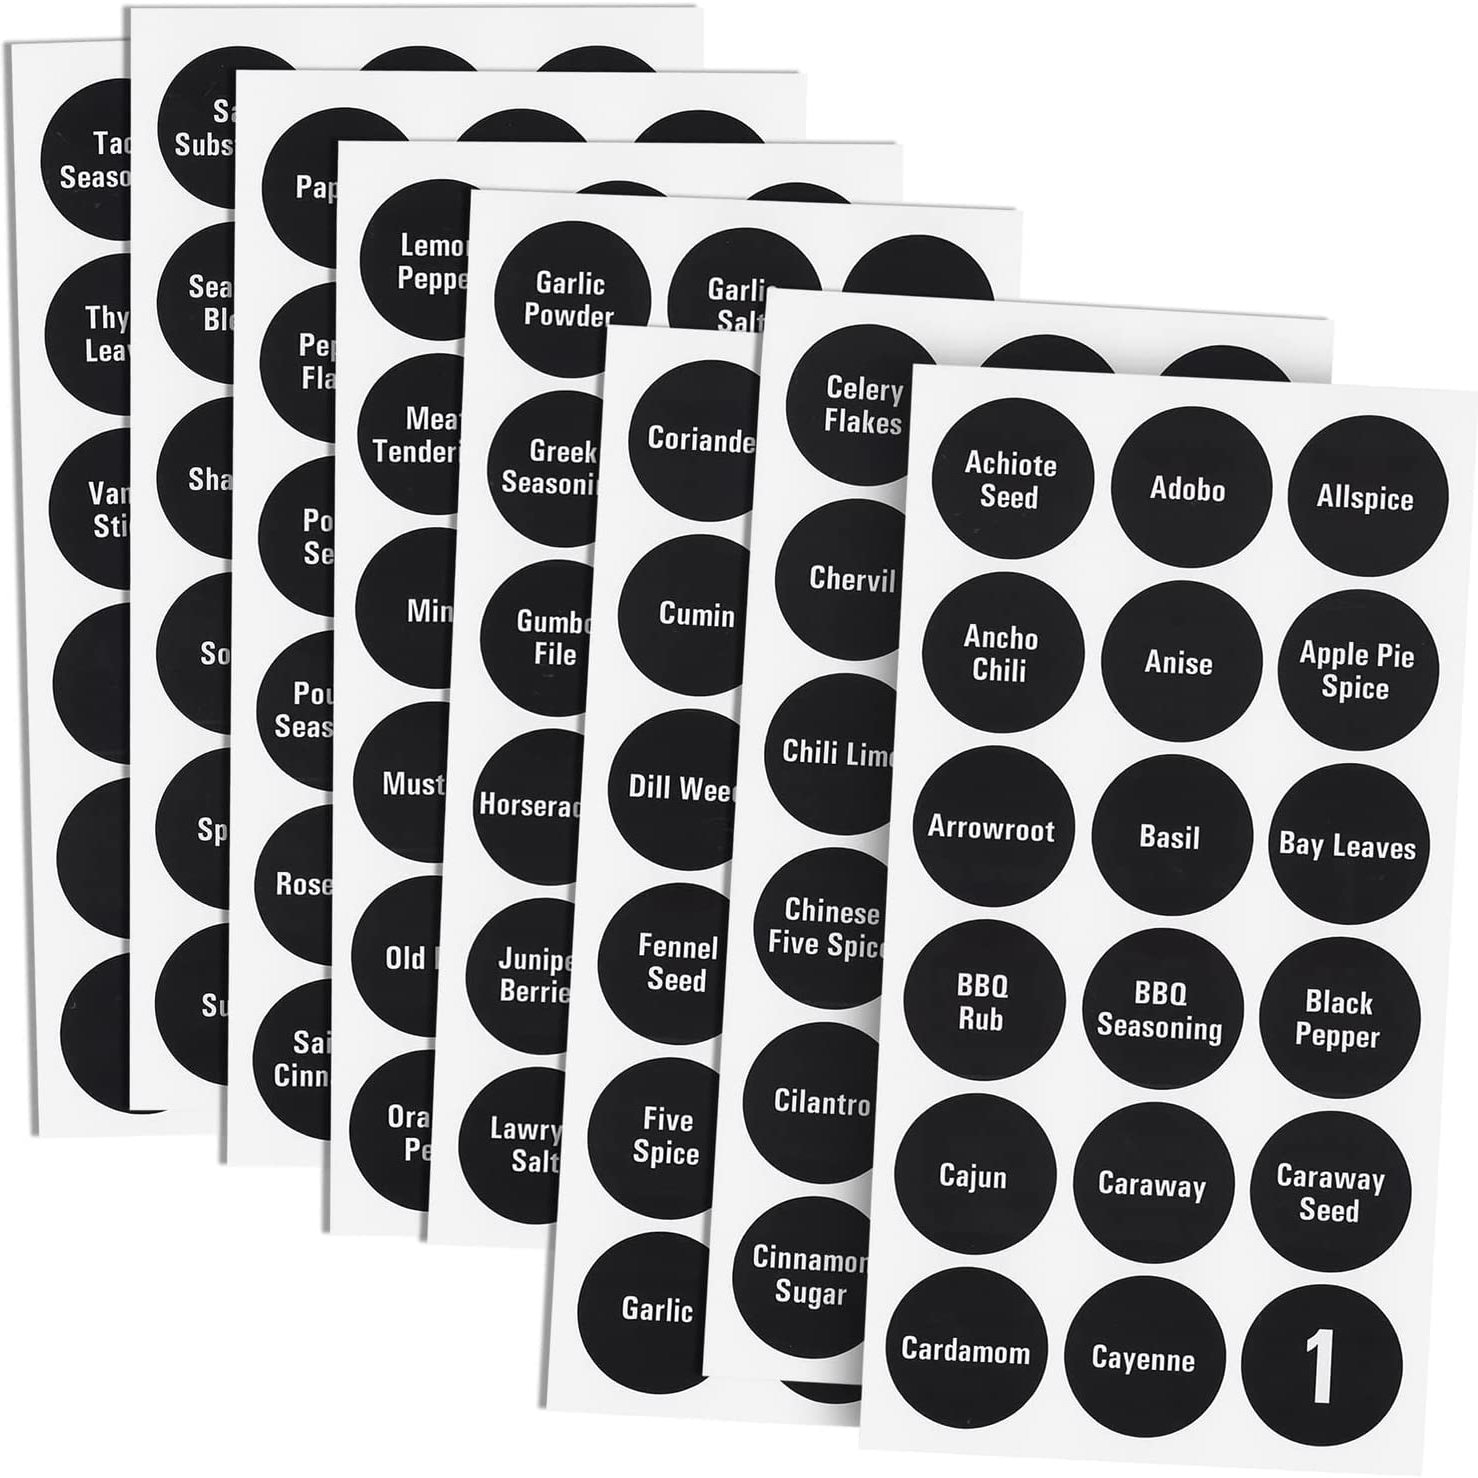  396 etiquetas impresas para tarros de especias y calcomanías  para despensa: etiqueta redonda de pizarra de especias de 1.5 pulgadas y  calcomanía de despensa de 3 x 1.5 pulgadas con etiquetas